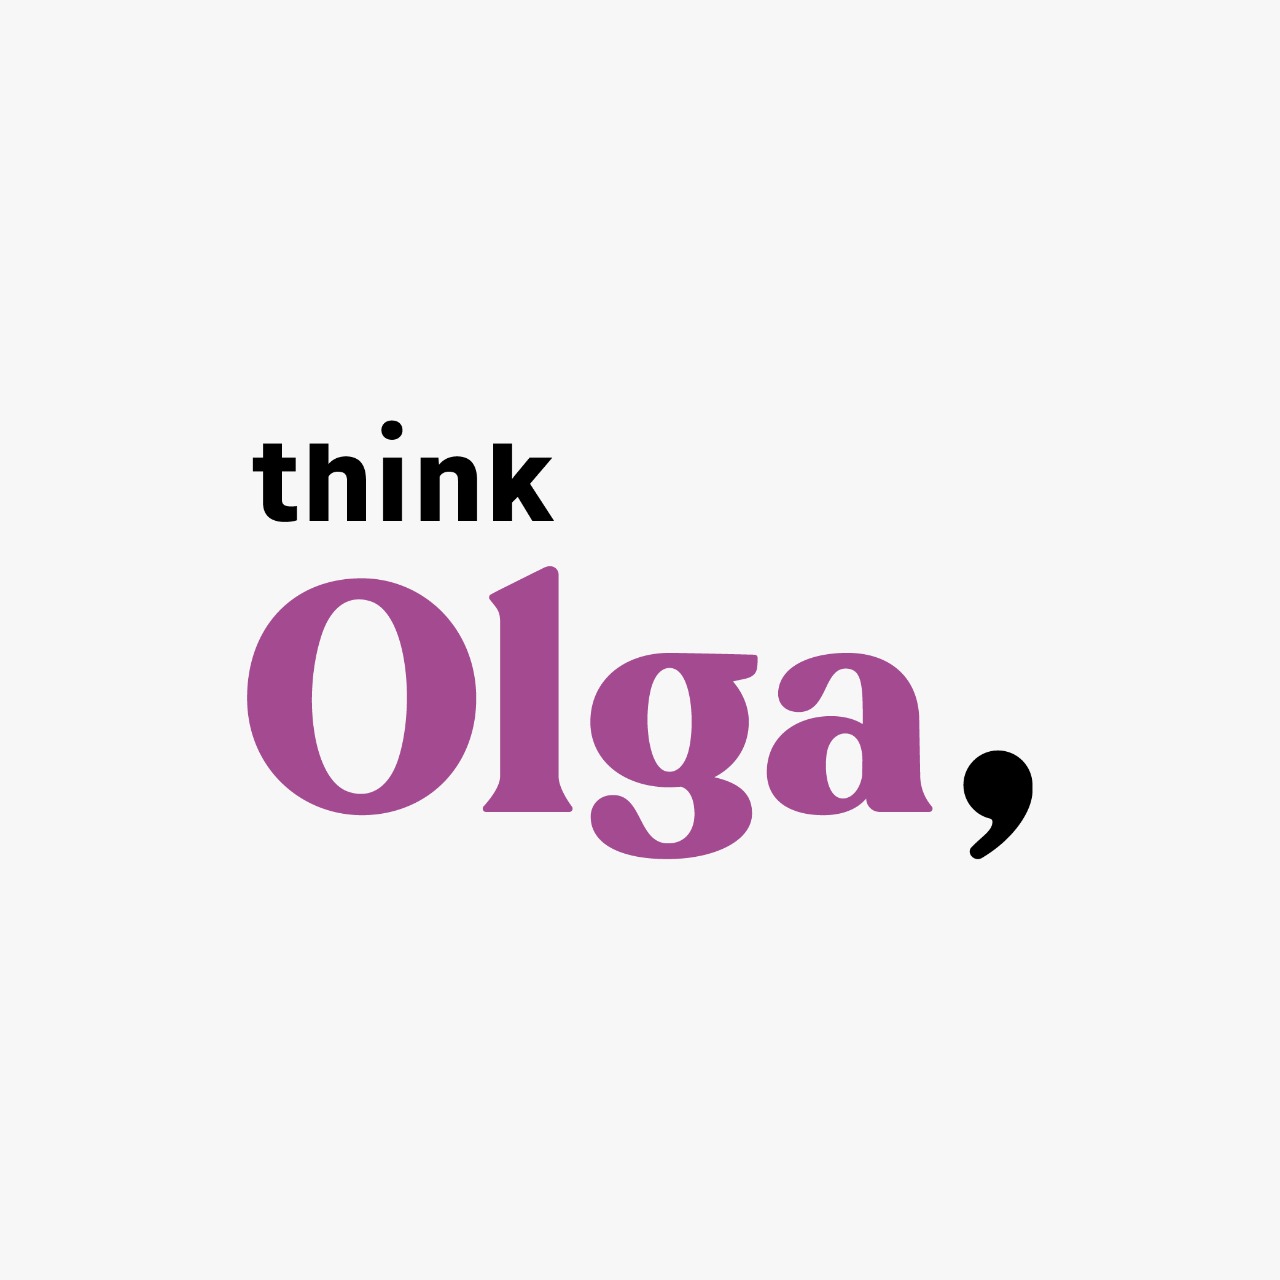 Think Olga 